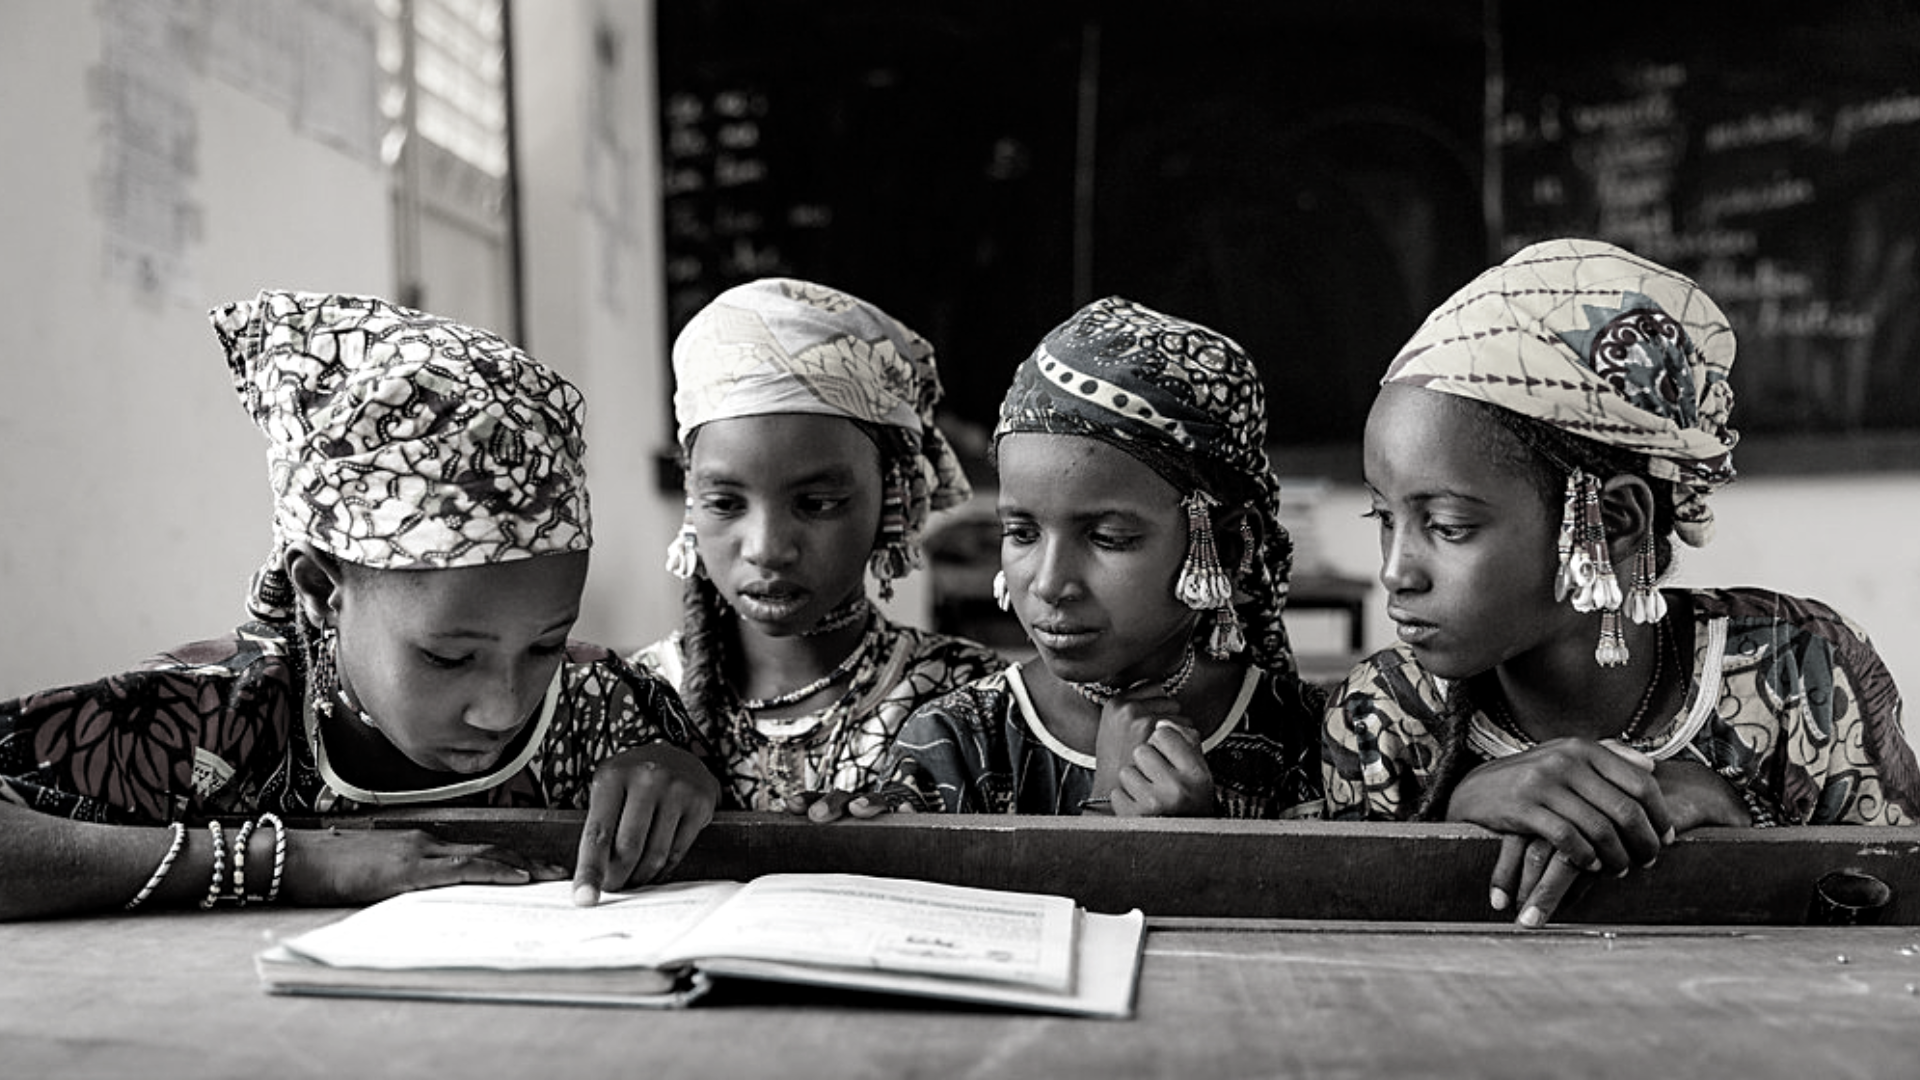 Young girls share a textbook in class. Ecole Patti, Makalondi, Tilaberri Region, Niger, 2017.